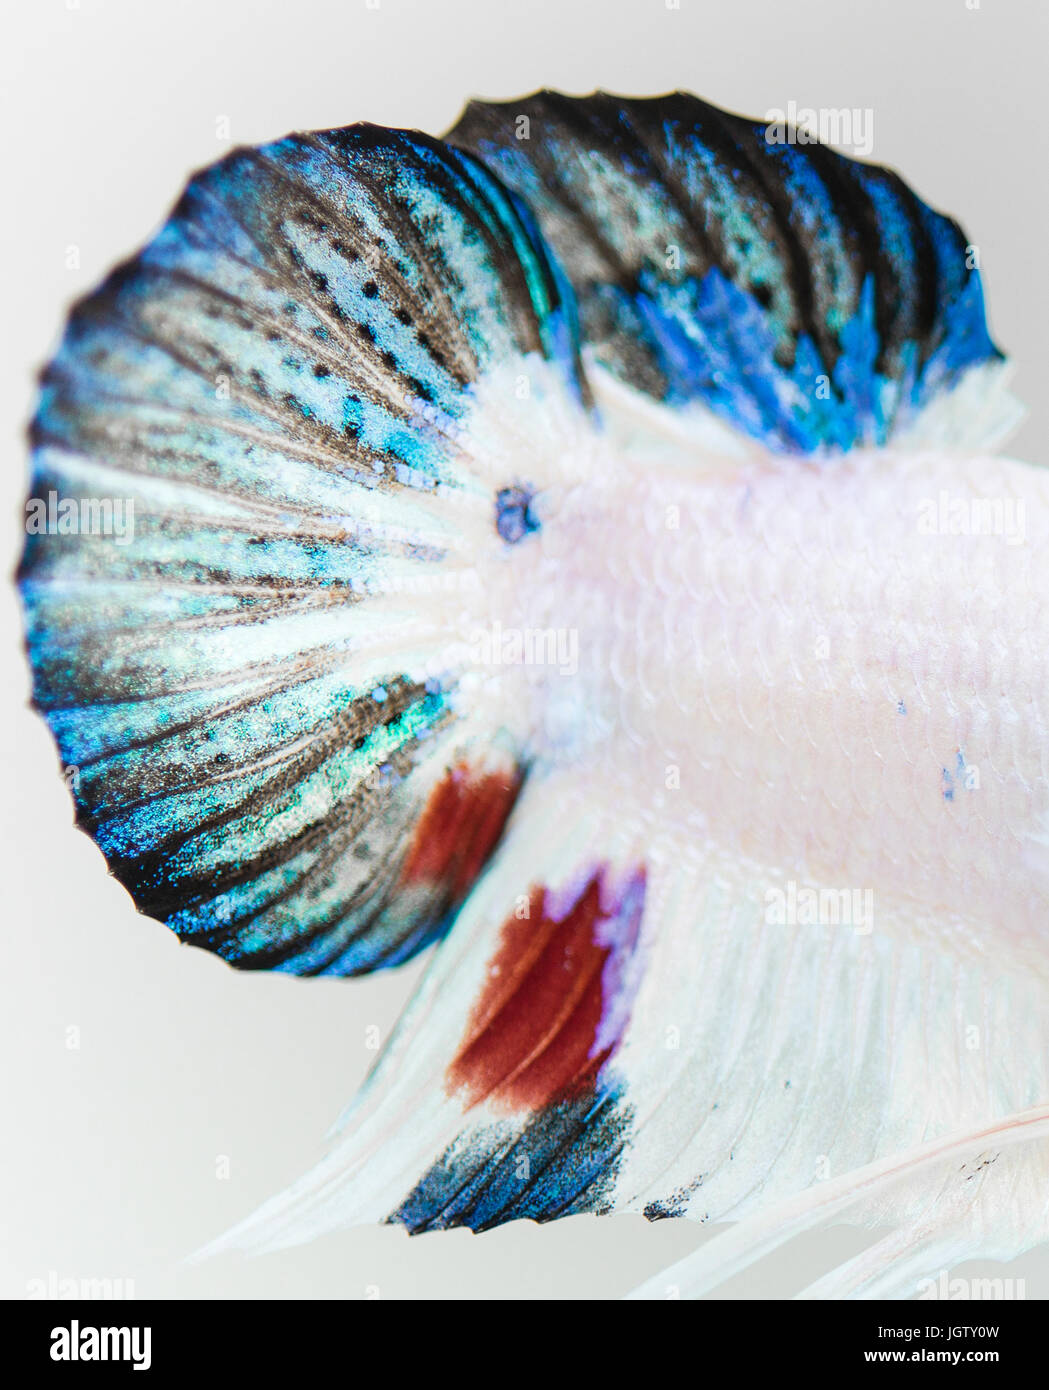 Betta splendens fish tail fins close-up Stock Photo